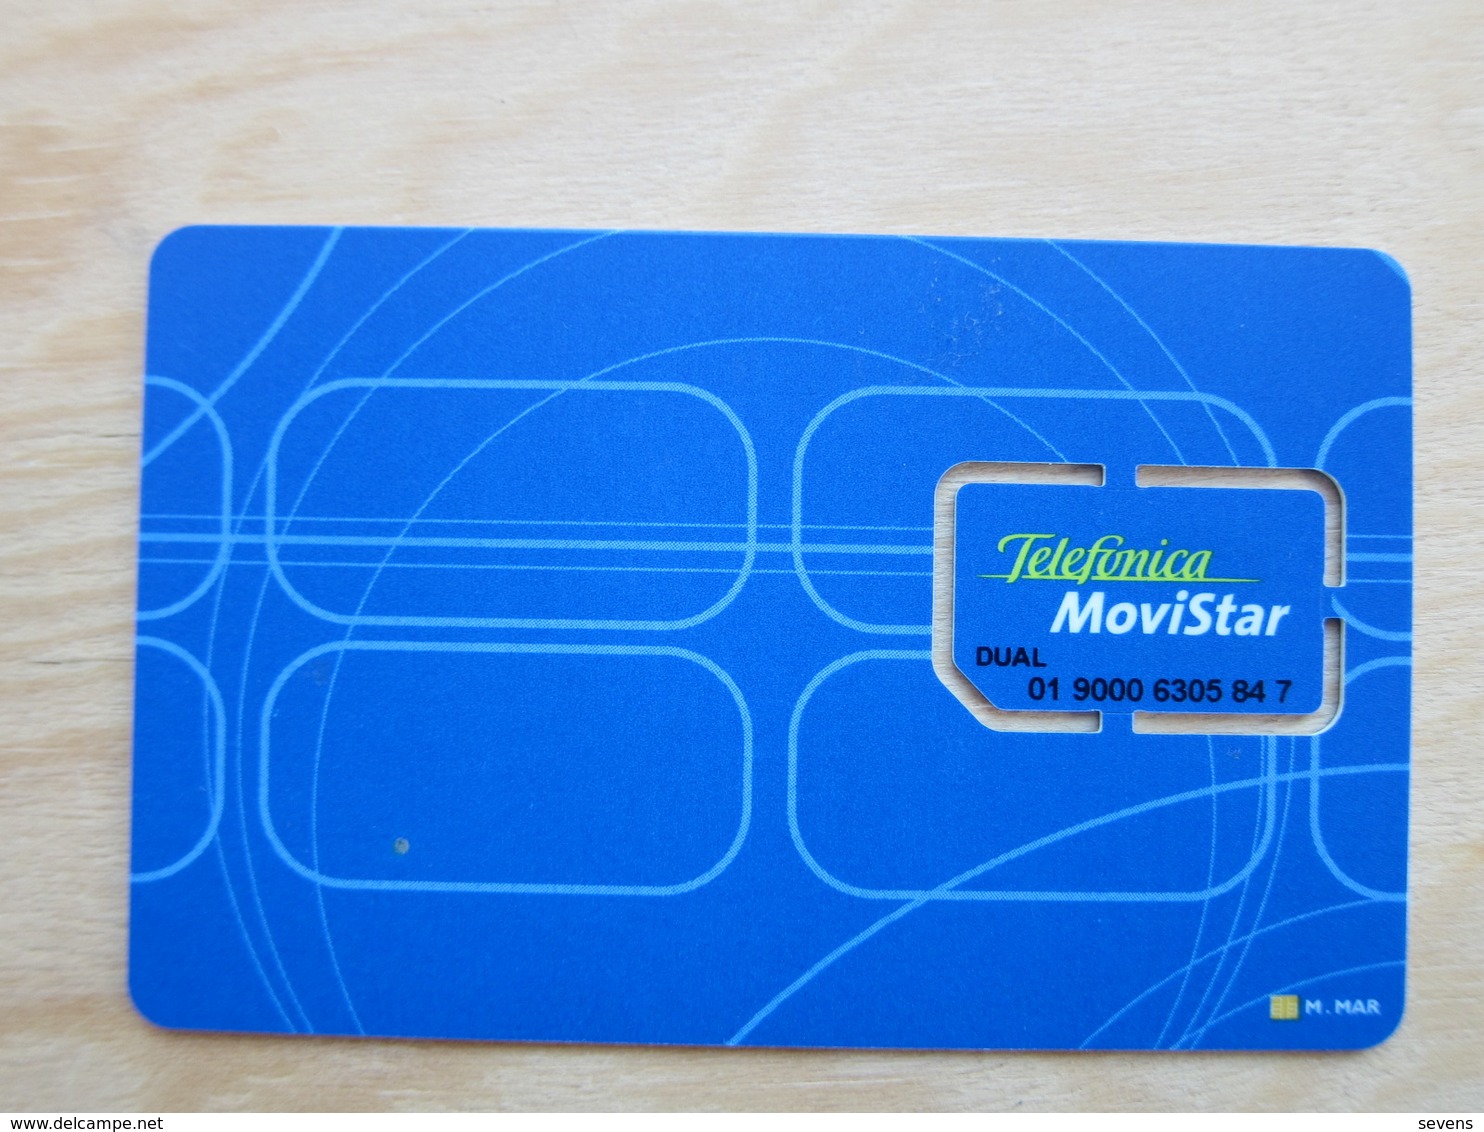 Movistar GSM SIM Card,Dual, Fixed Chip - Telefonica